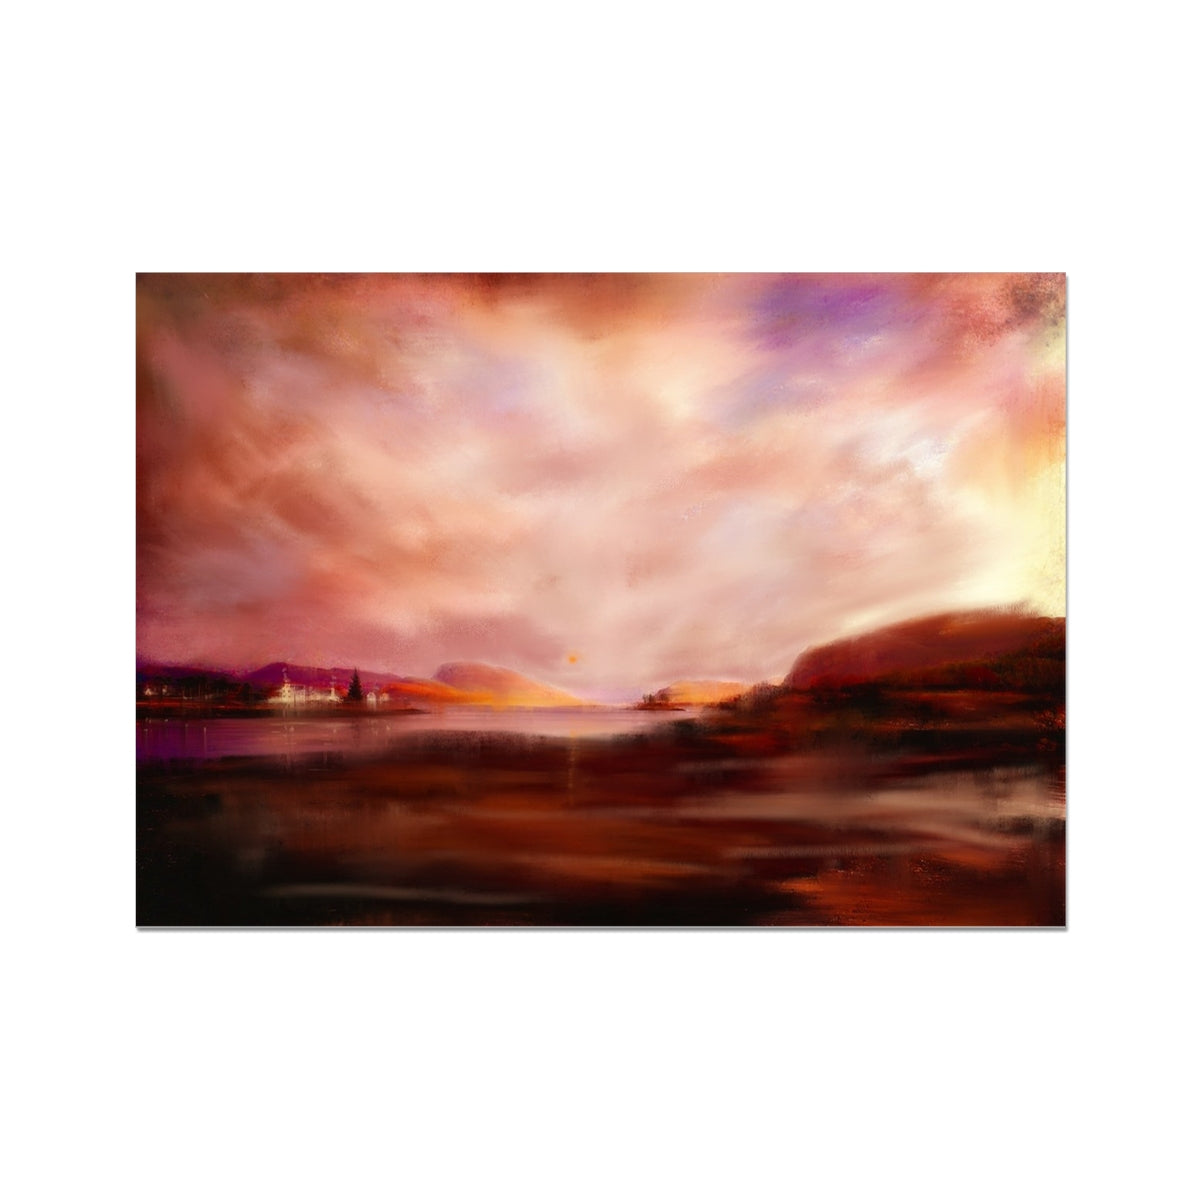 Plockton Sunset Painting | Fine Art Prints From Scotland-Fine art-Scottish Highlands & Lowlands Art Gallery-A2 Landscape-Paintings, Prints, Homeware, Art Gifts From Scotland By Scottish Artist Kevin Hunter